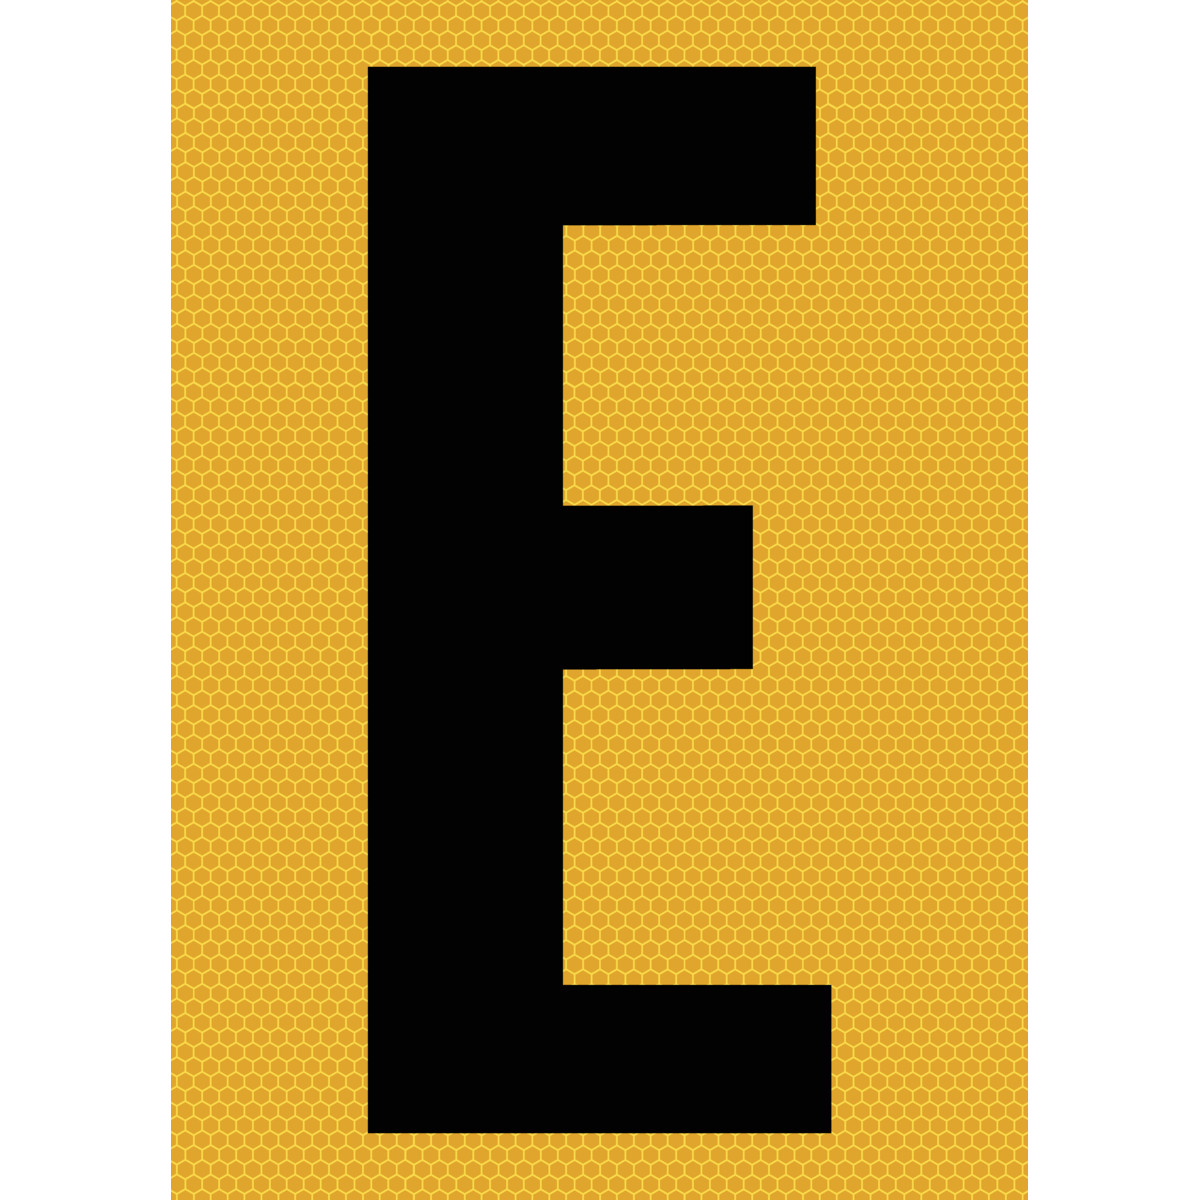 6" Black on Yellow SunBright® Reflective "E"